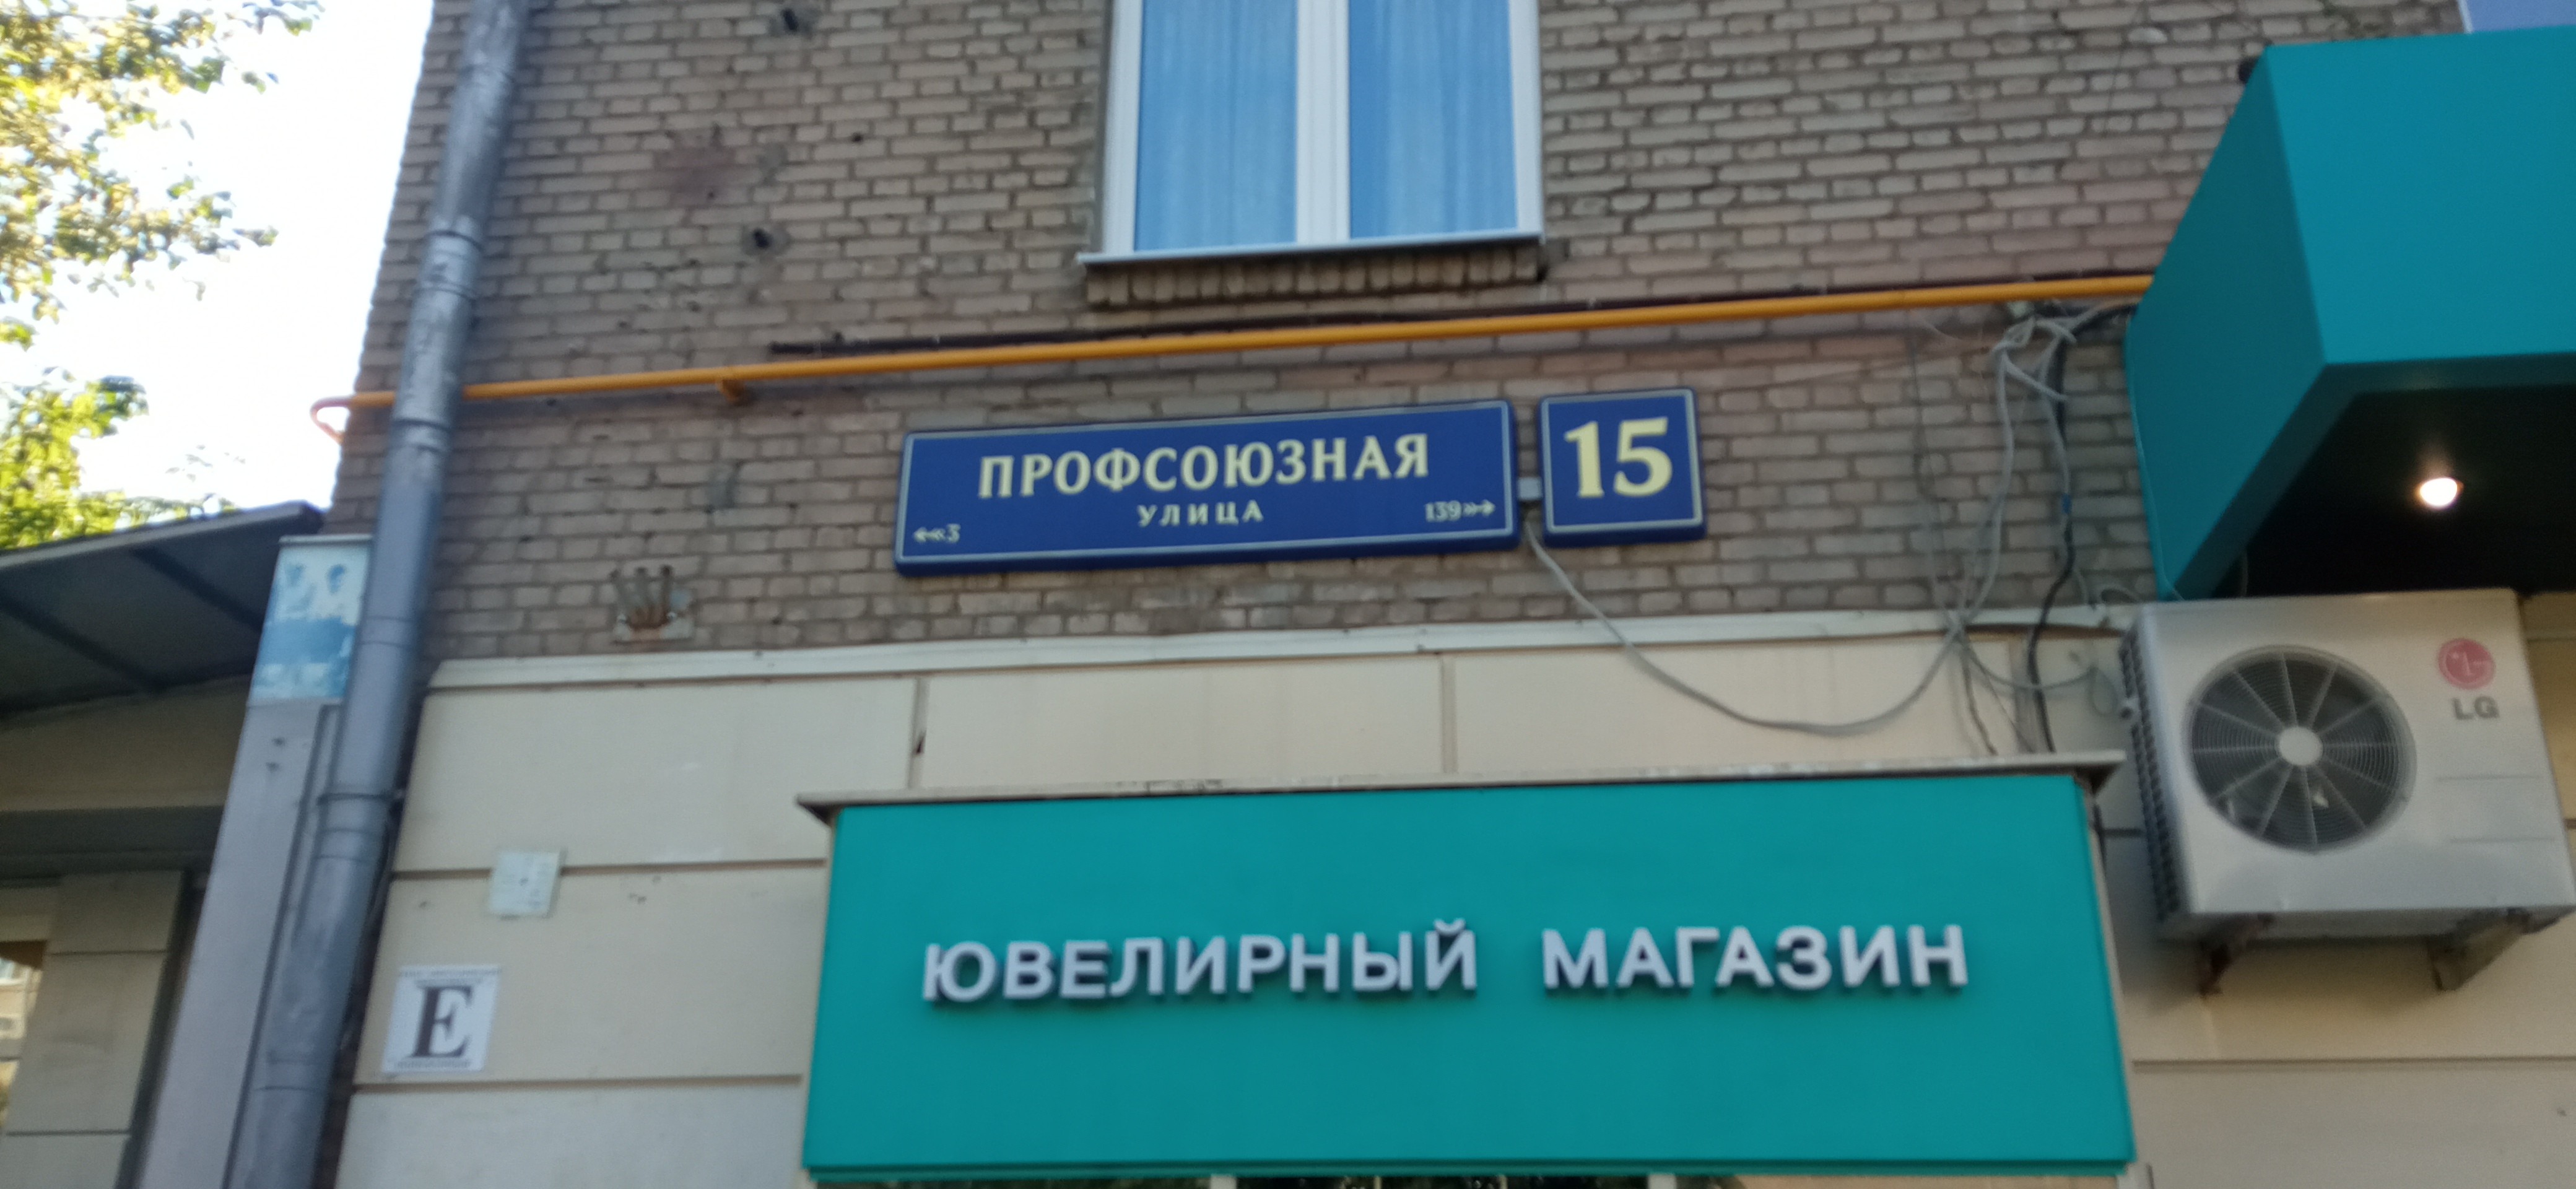 Московская д 15